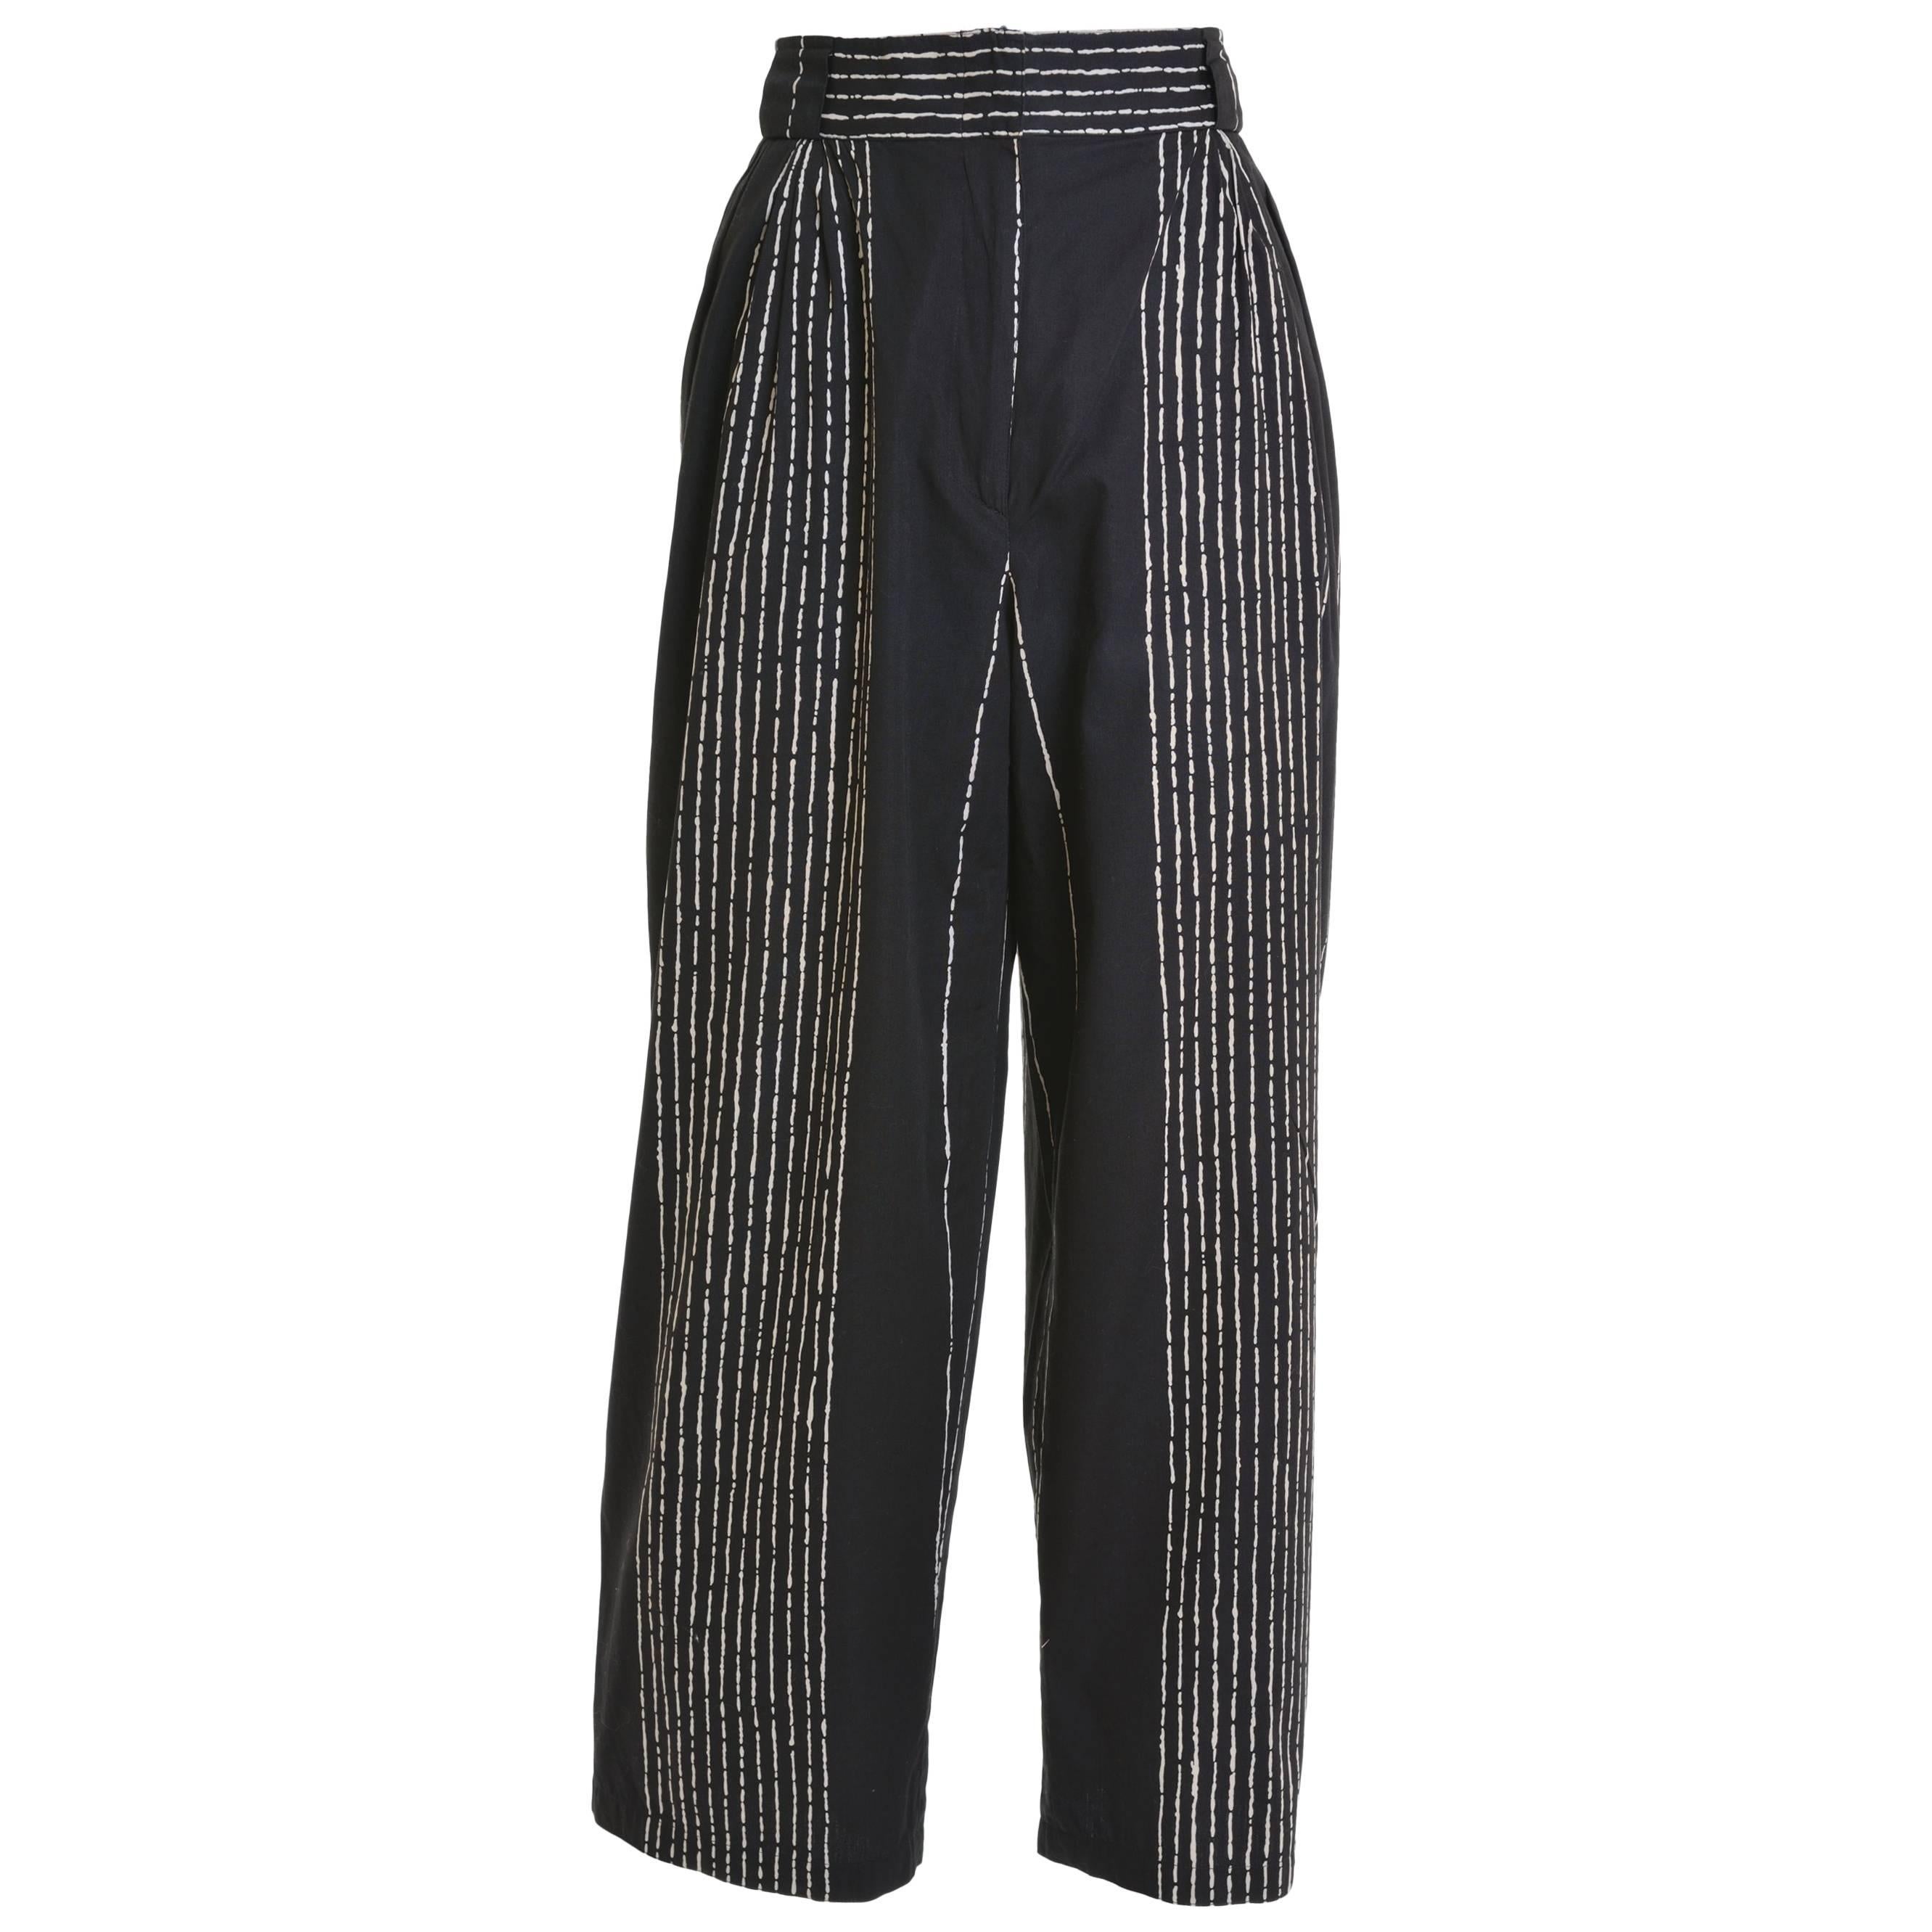 1980s GIANNI VERSACE Black Striped Cotton Pants